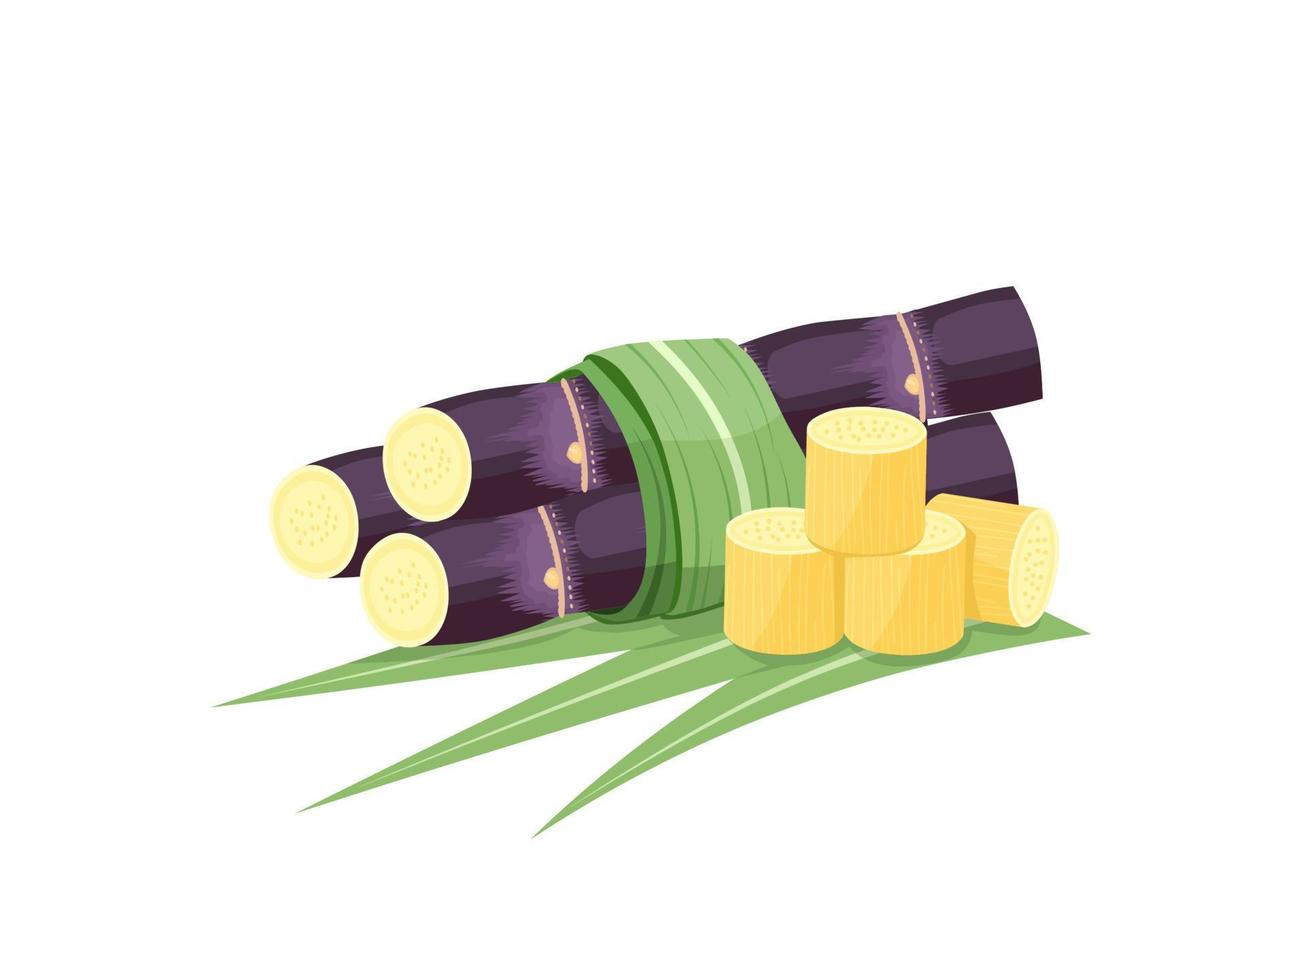 ilustración vectorial de caña de azúcar, aislada en fondo blanco, adecuada como etiqueta de embalaje para productos de caña de azúcar procesados. vector